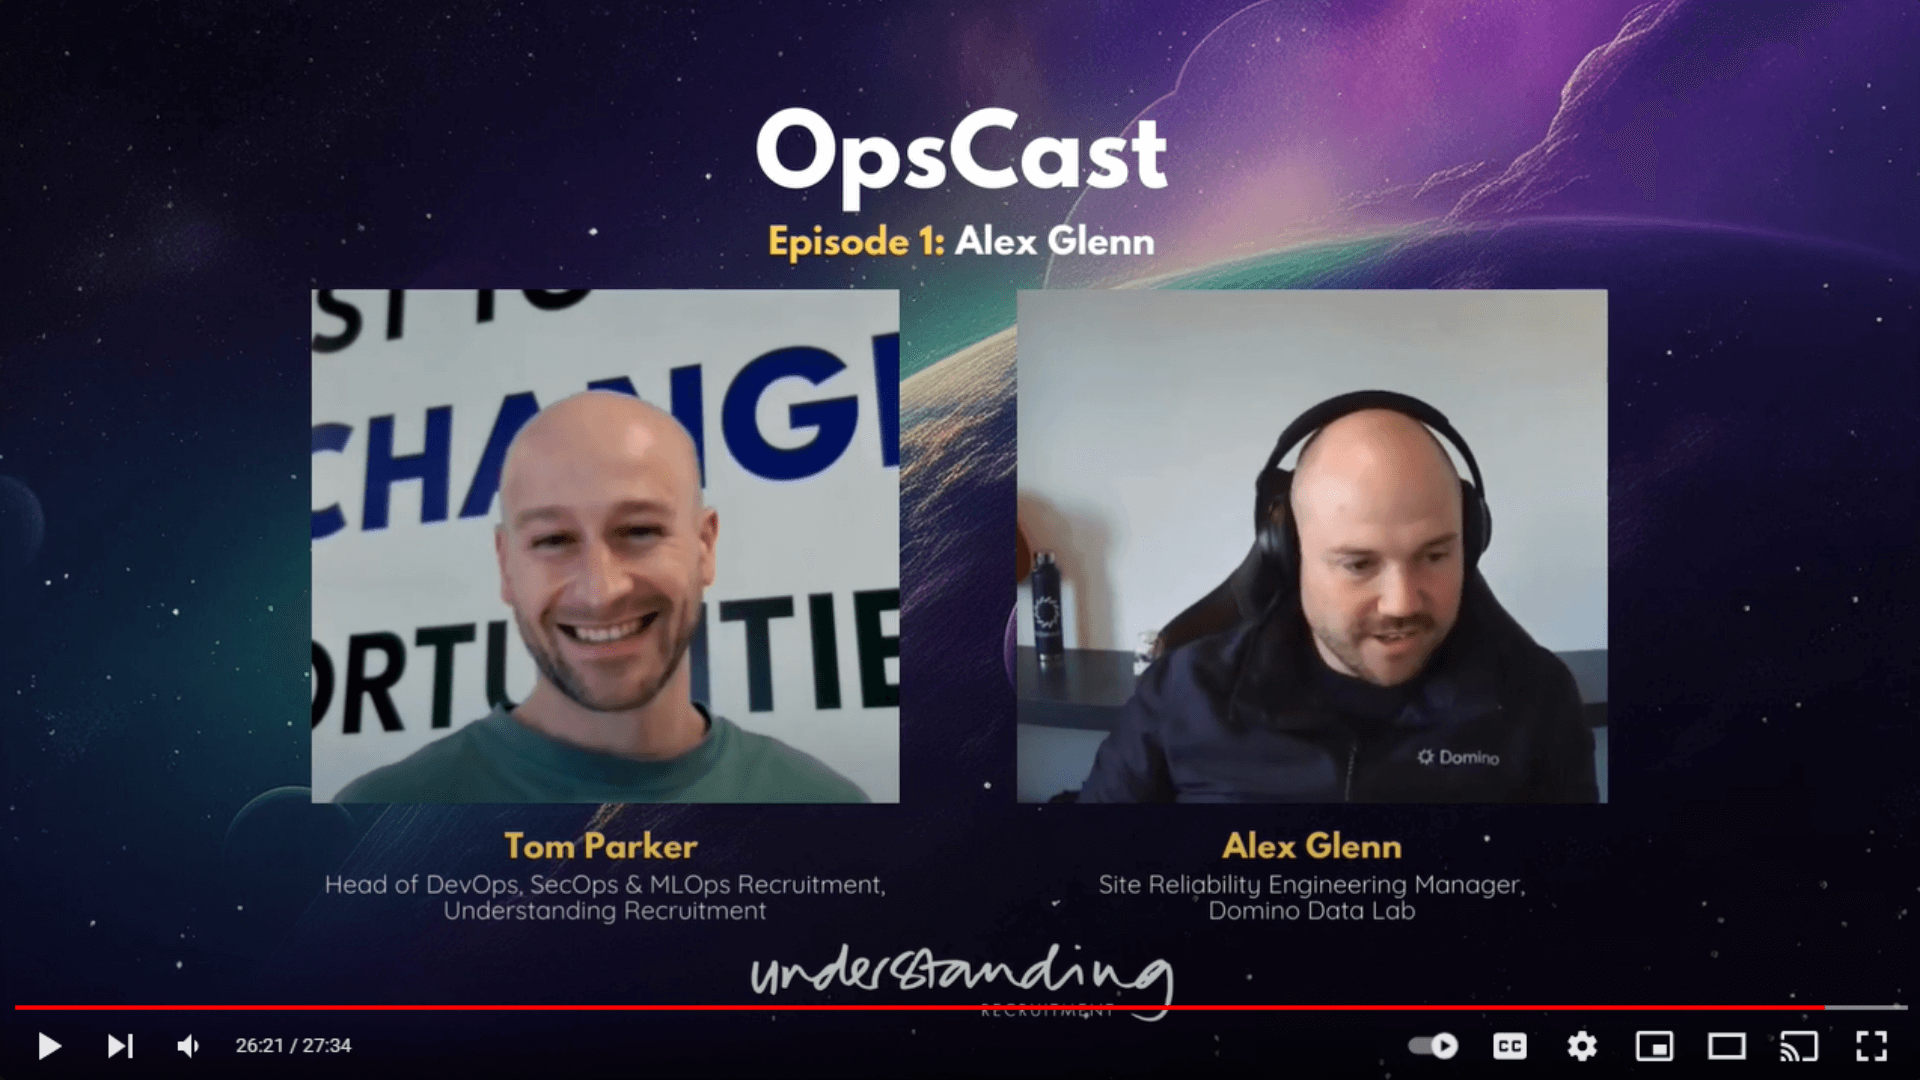 OpsCast Episode 1: Alex Glenn